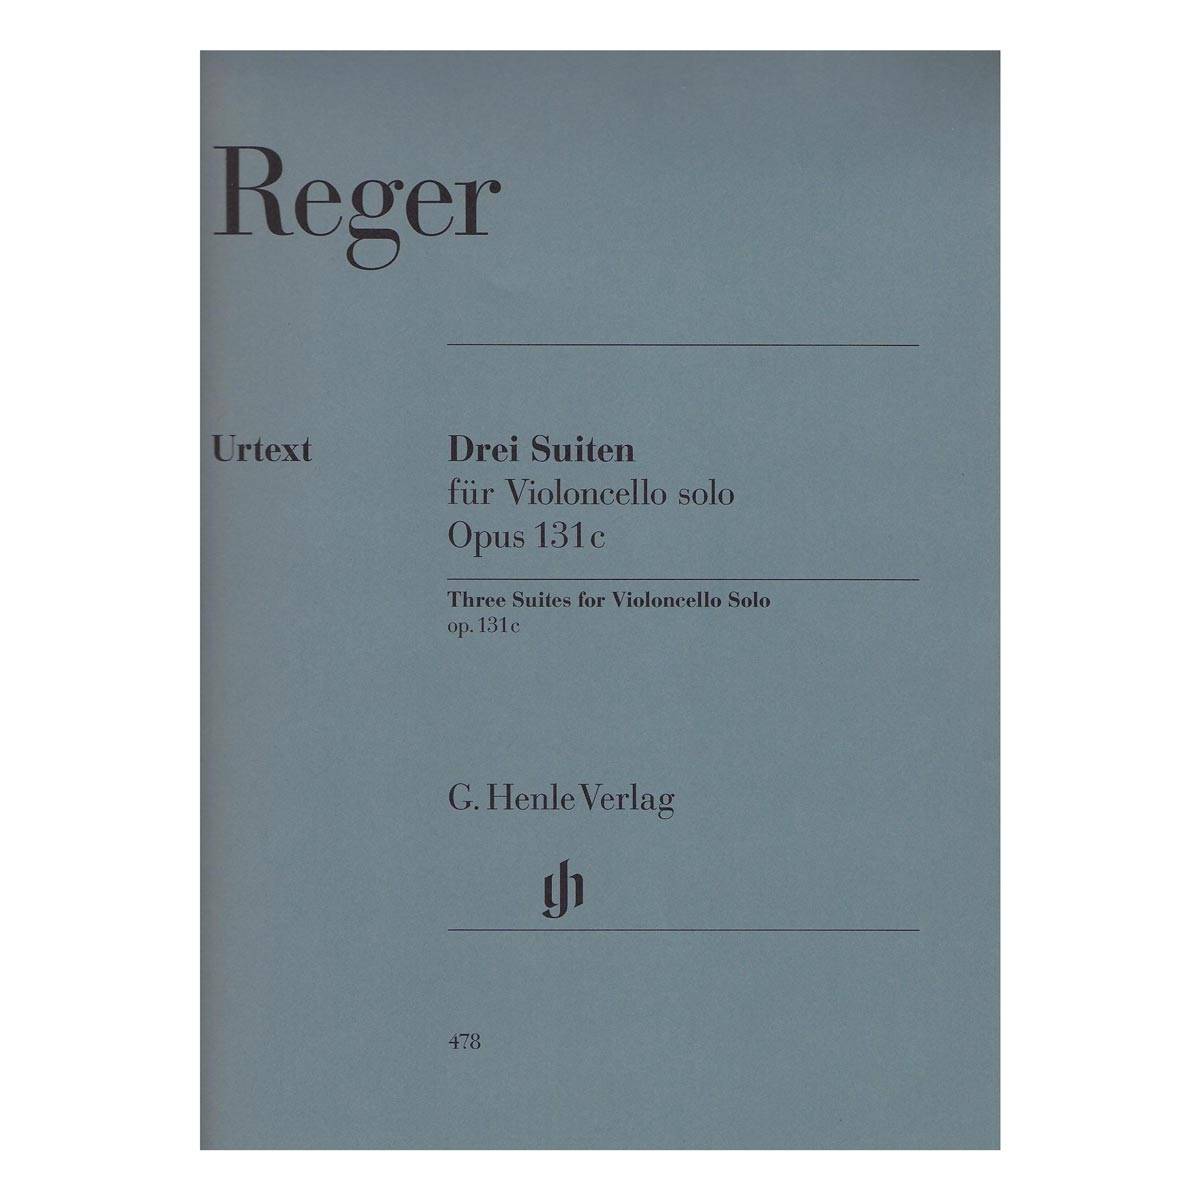 Reger - Three Suites for Violoncello Solo Op.131c